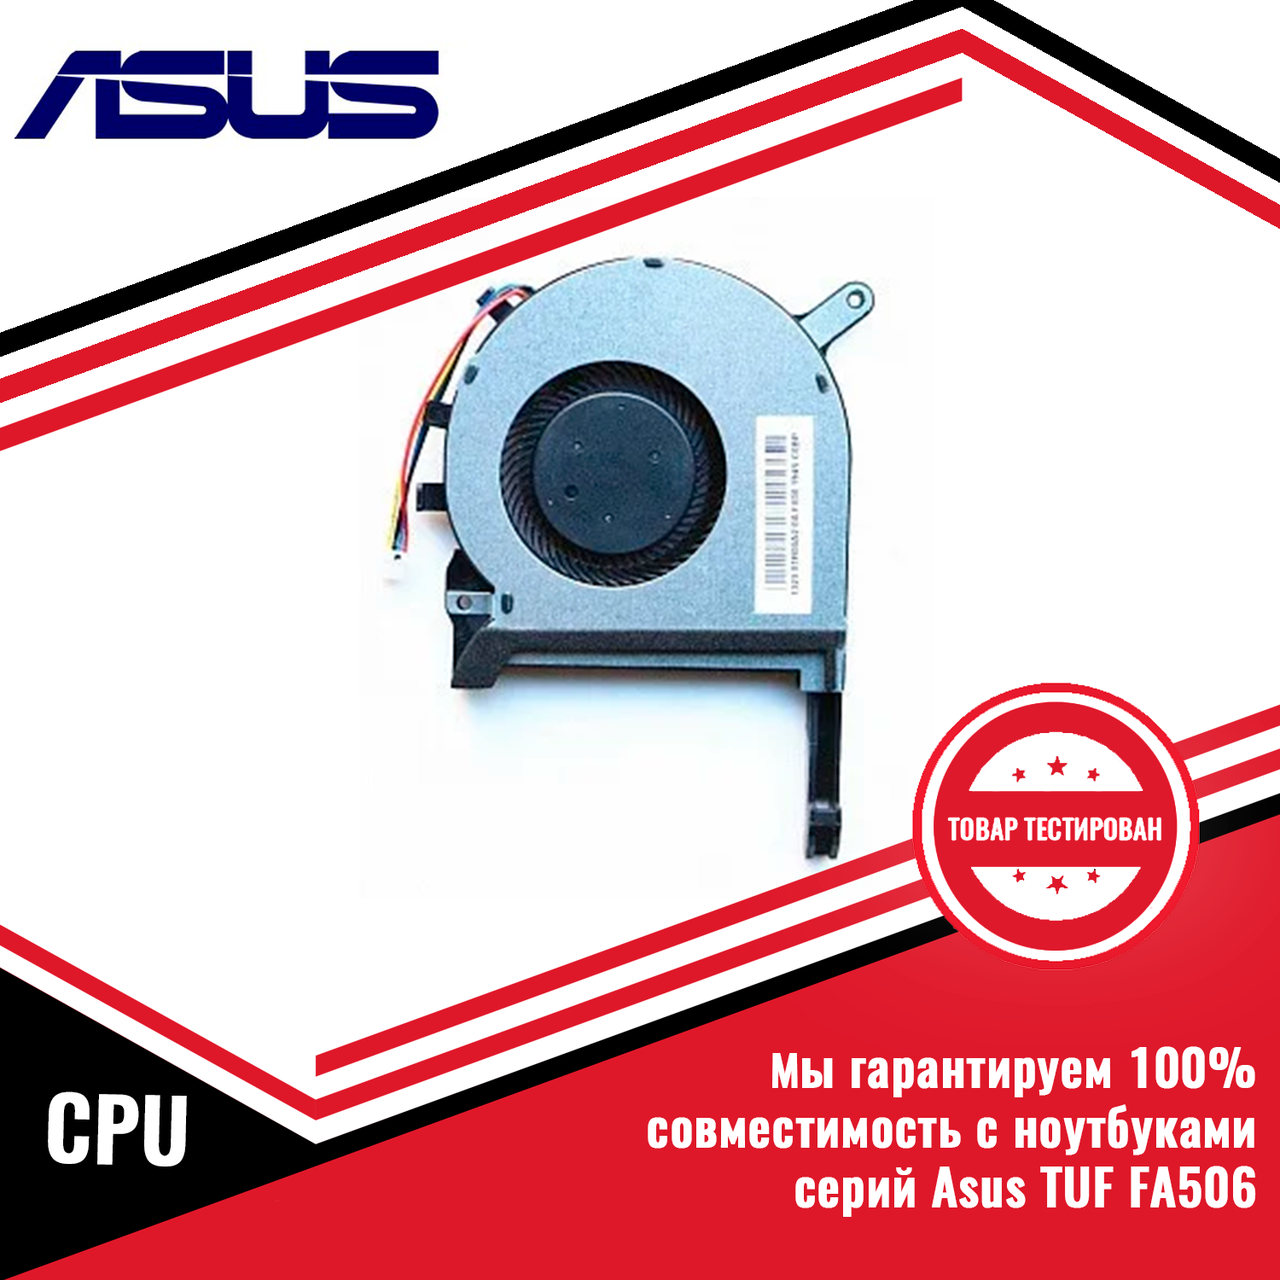 Оригинальный кулер (вентилятор) Asus TUF FA506 CPU